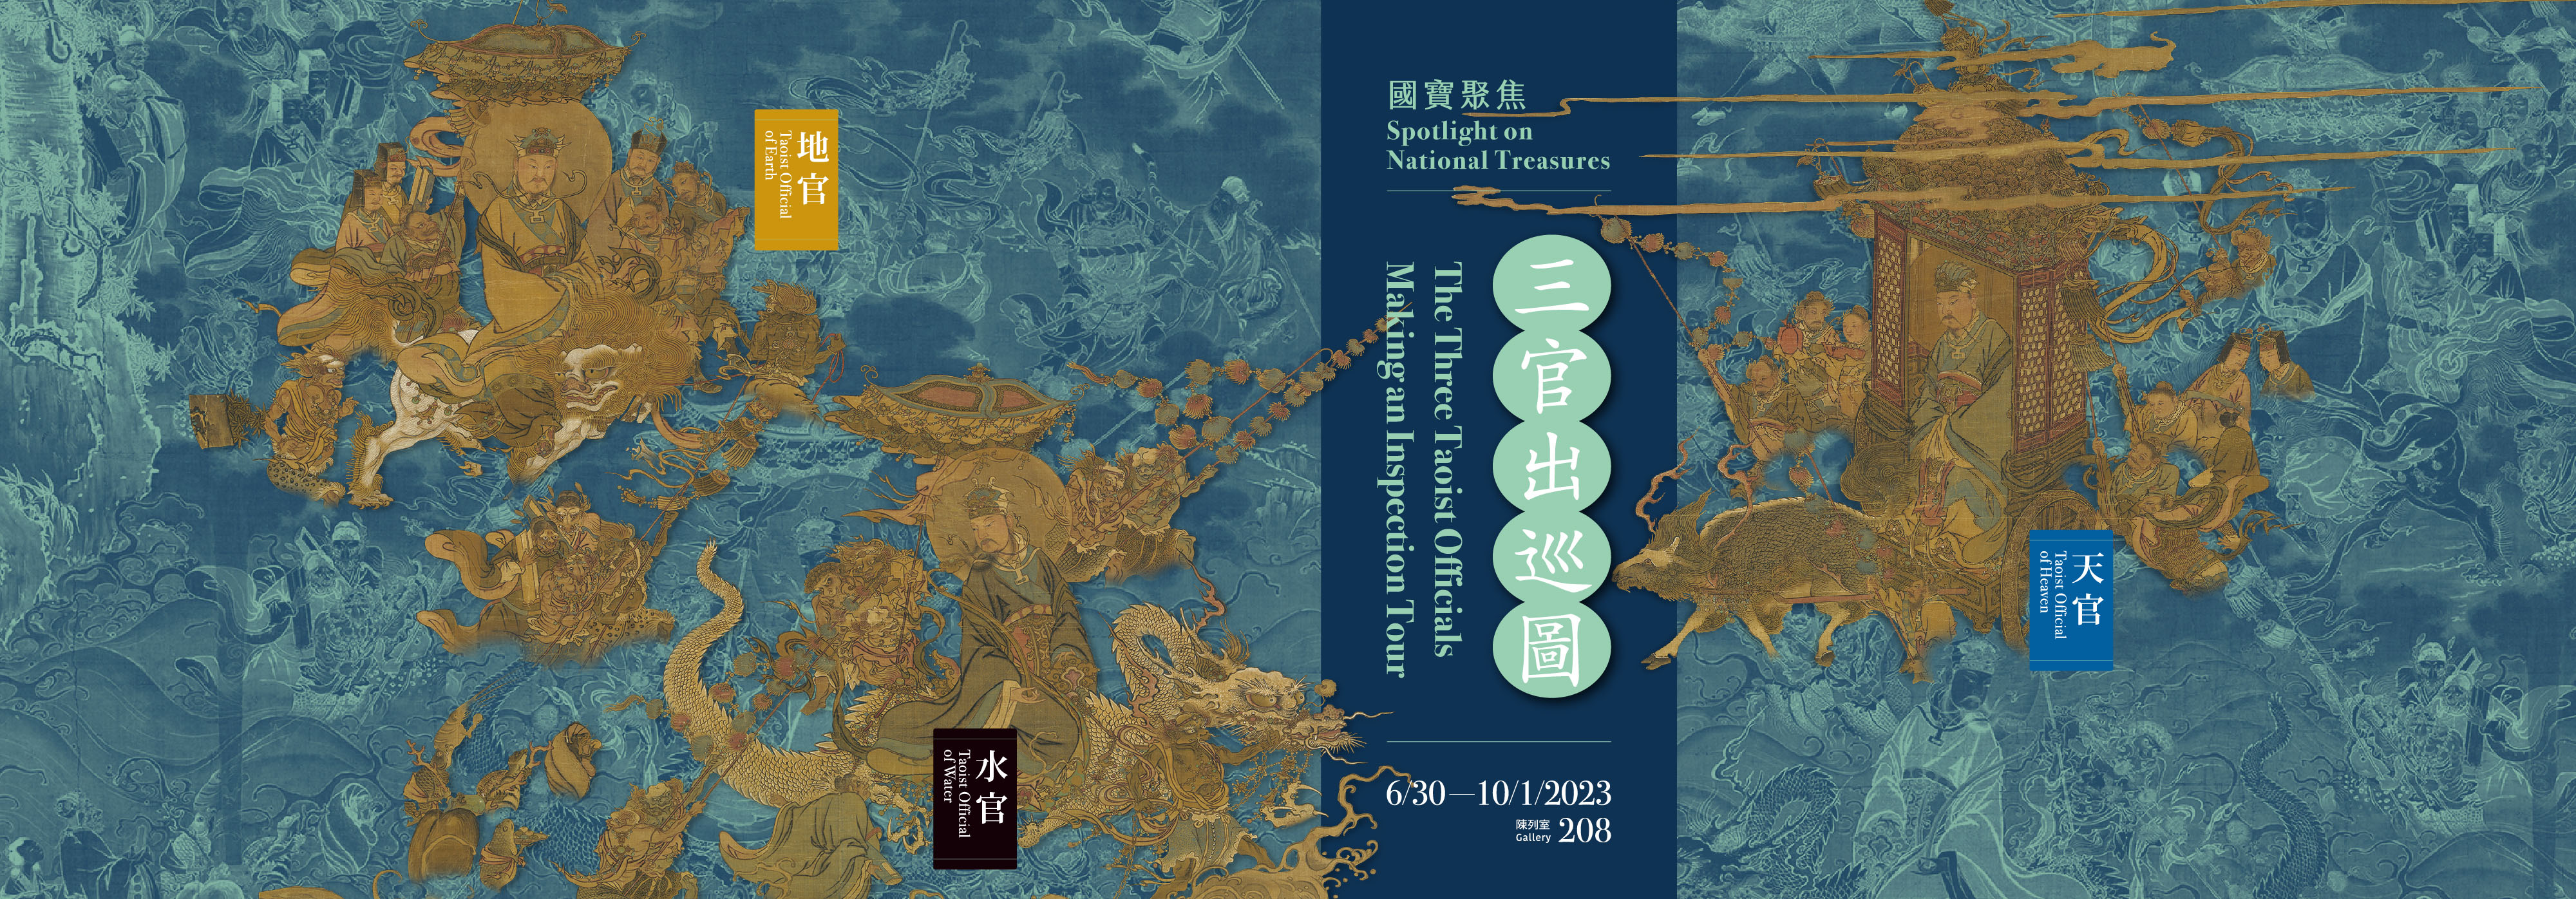 Spotlight on National Treasures III  The Three Taoist Officials Making an Inspection Tour